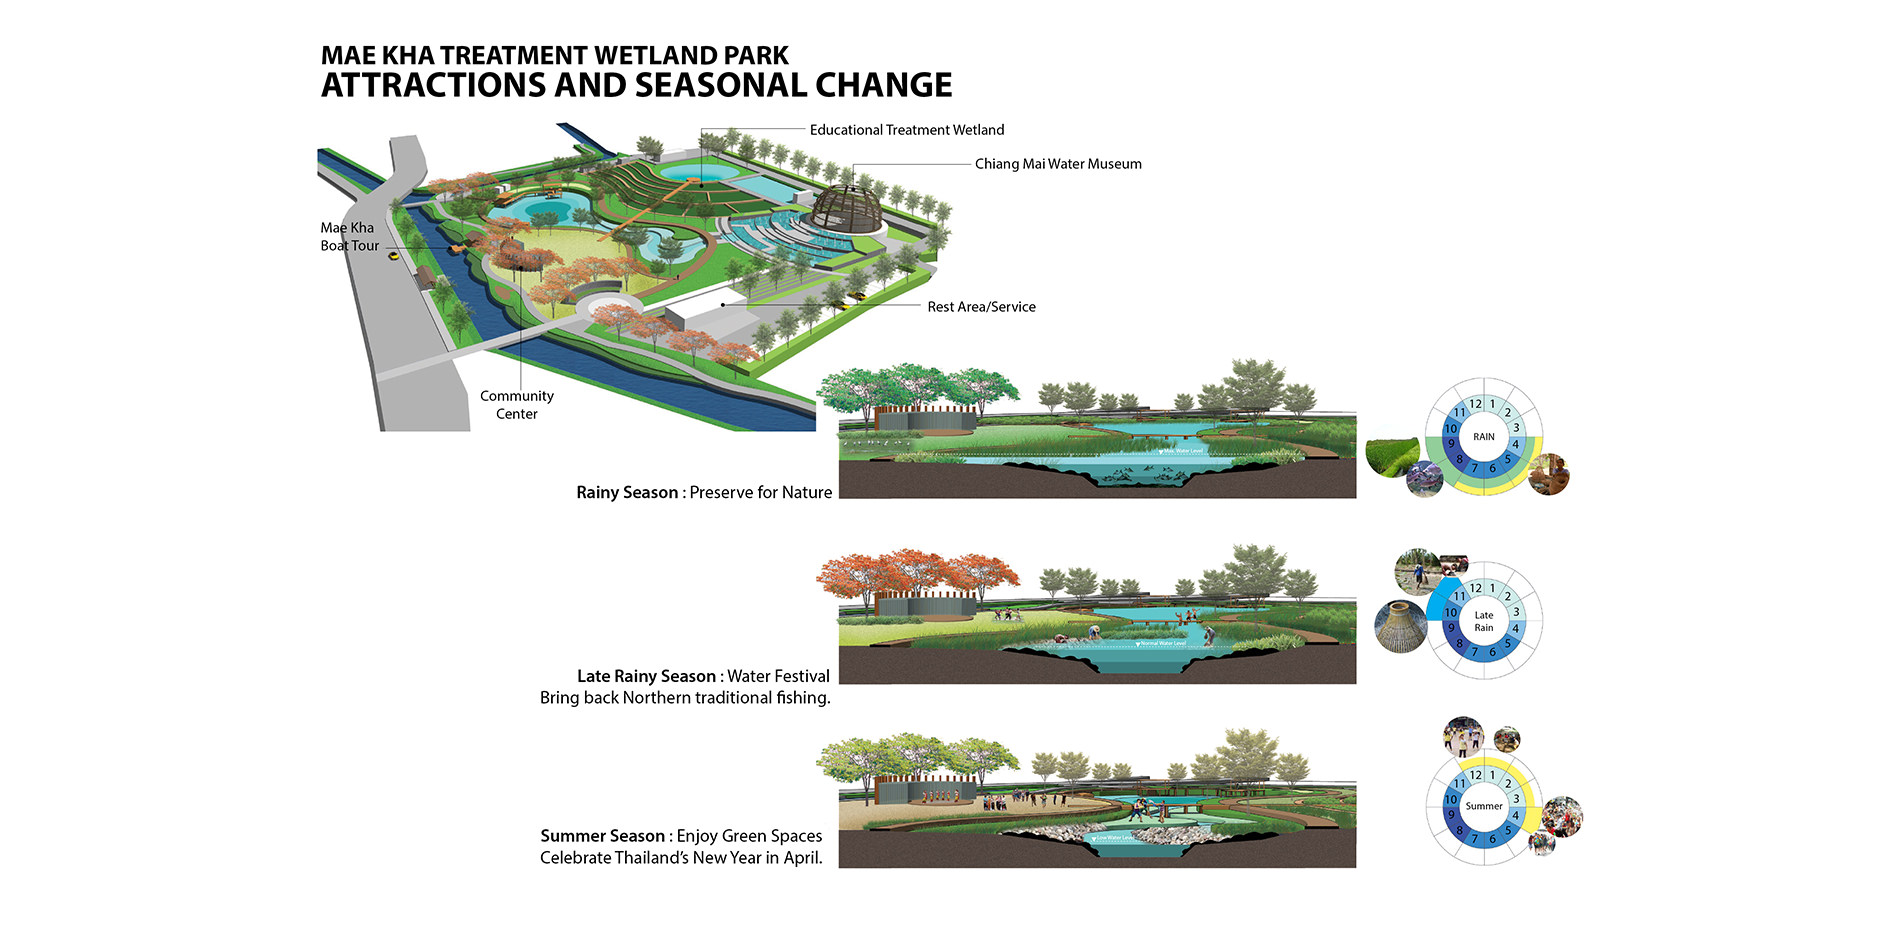 Mae Kha treatment wetland park attractions and seasonal change design